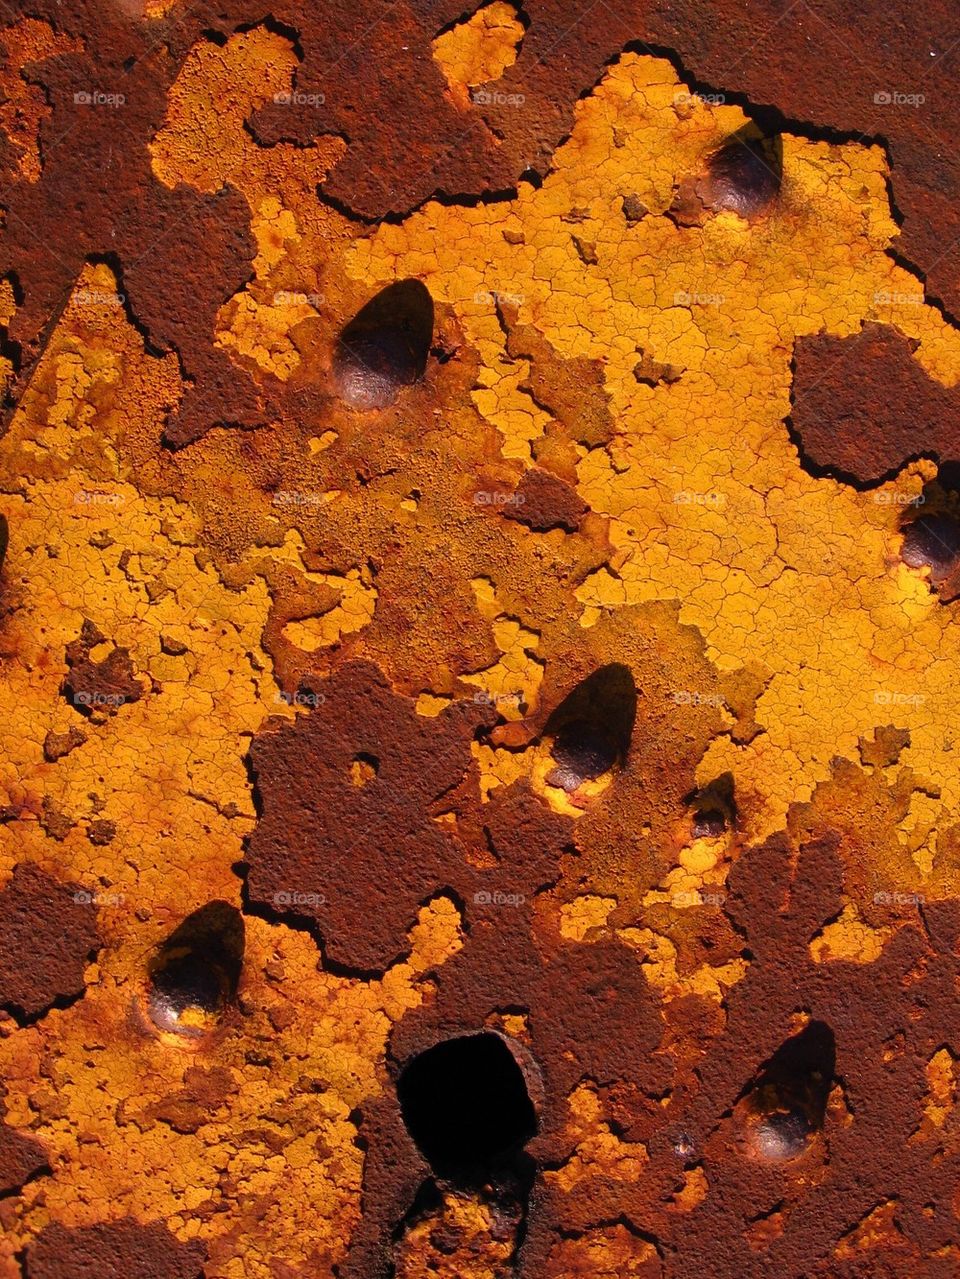 Rust and peeling yellow paint